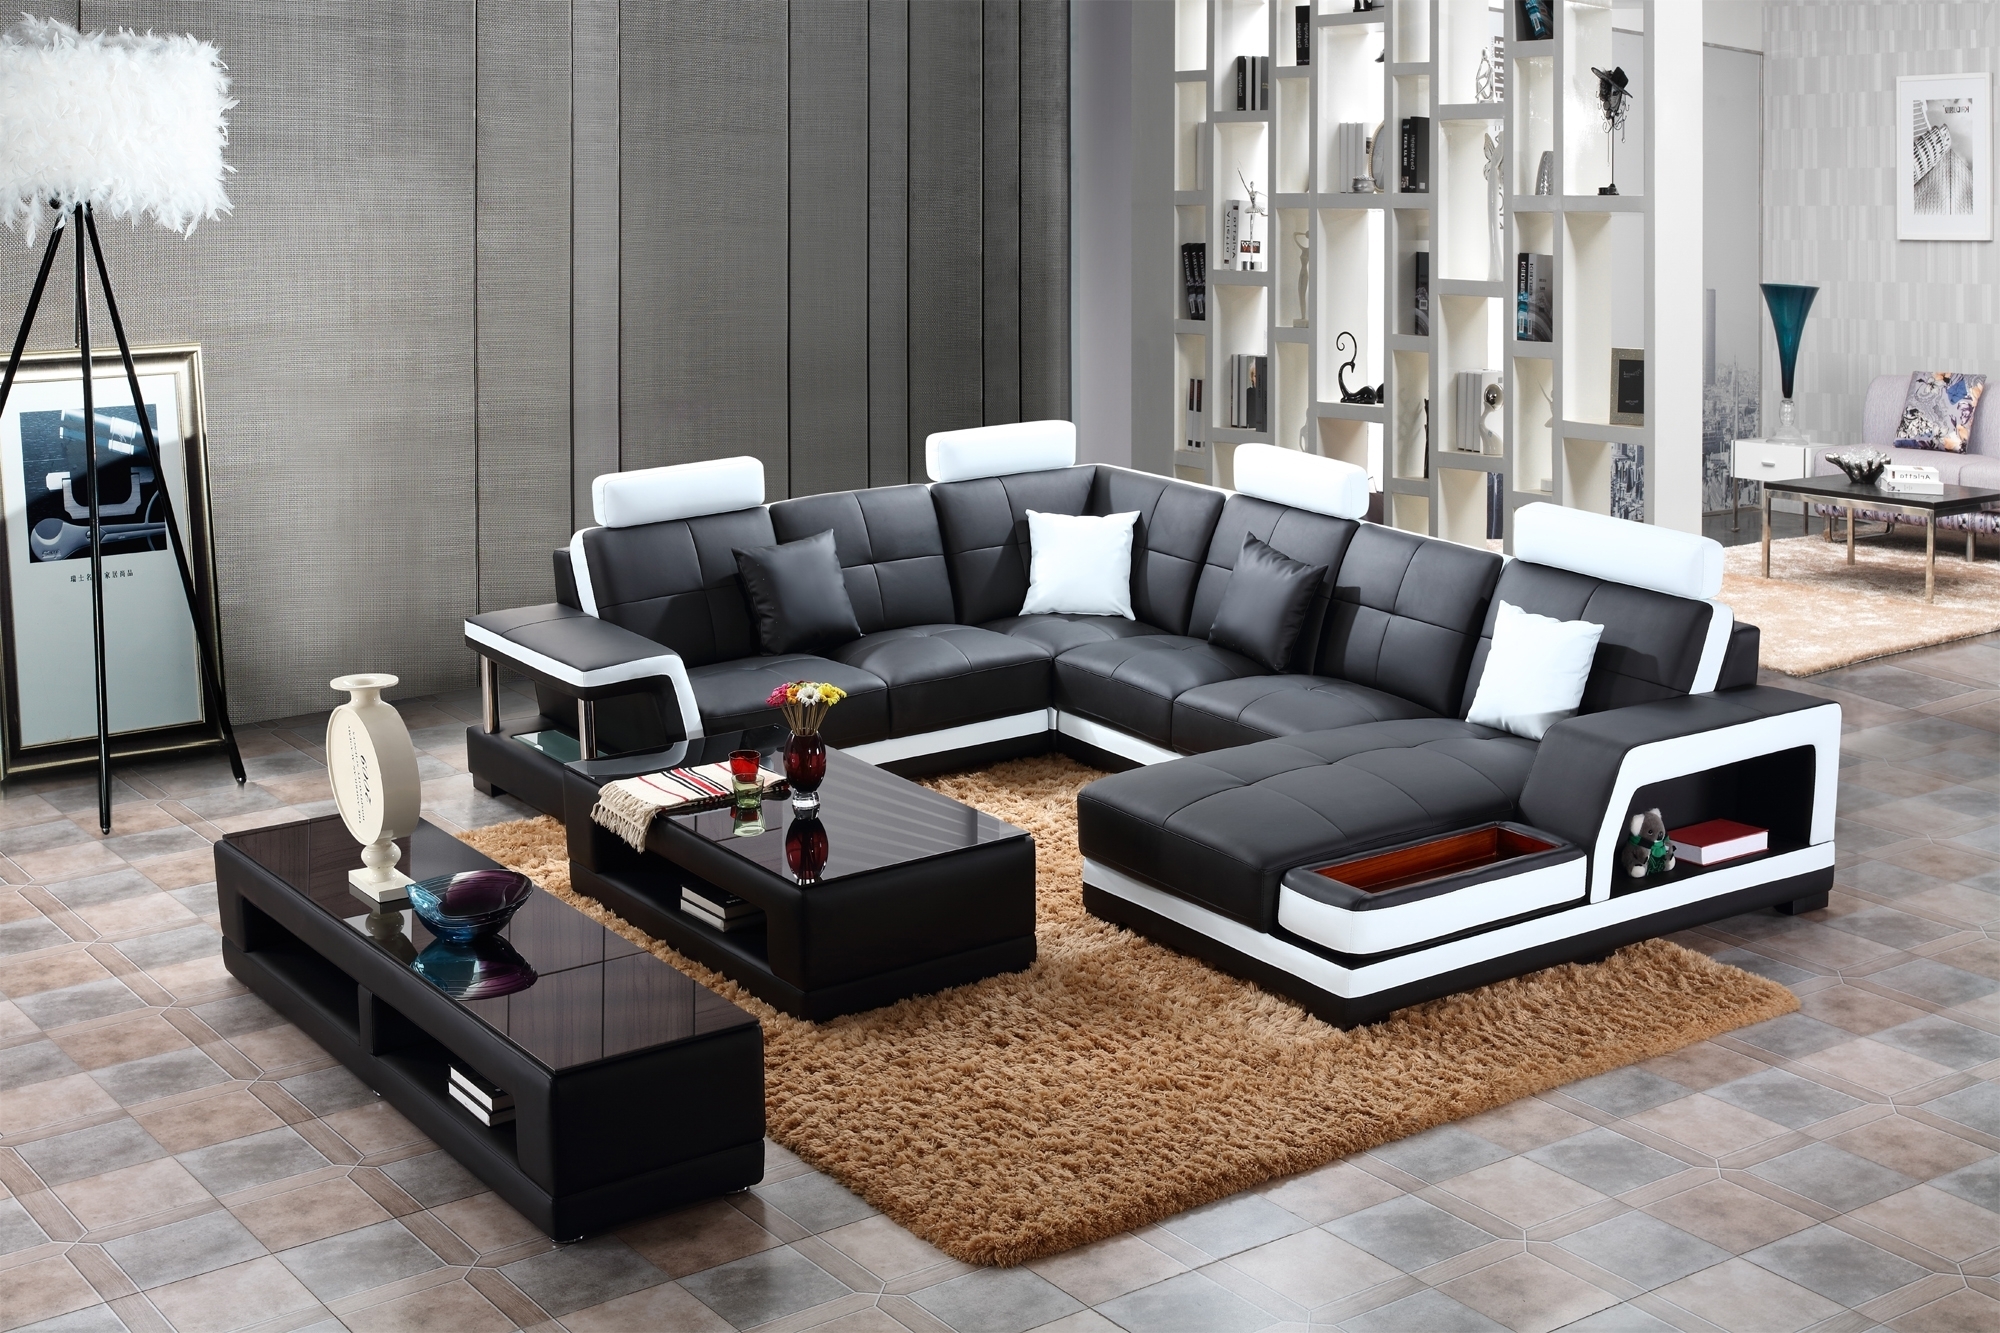 Modern U-Shape Sofa - Joy Furniture